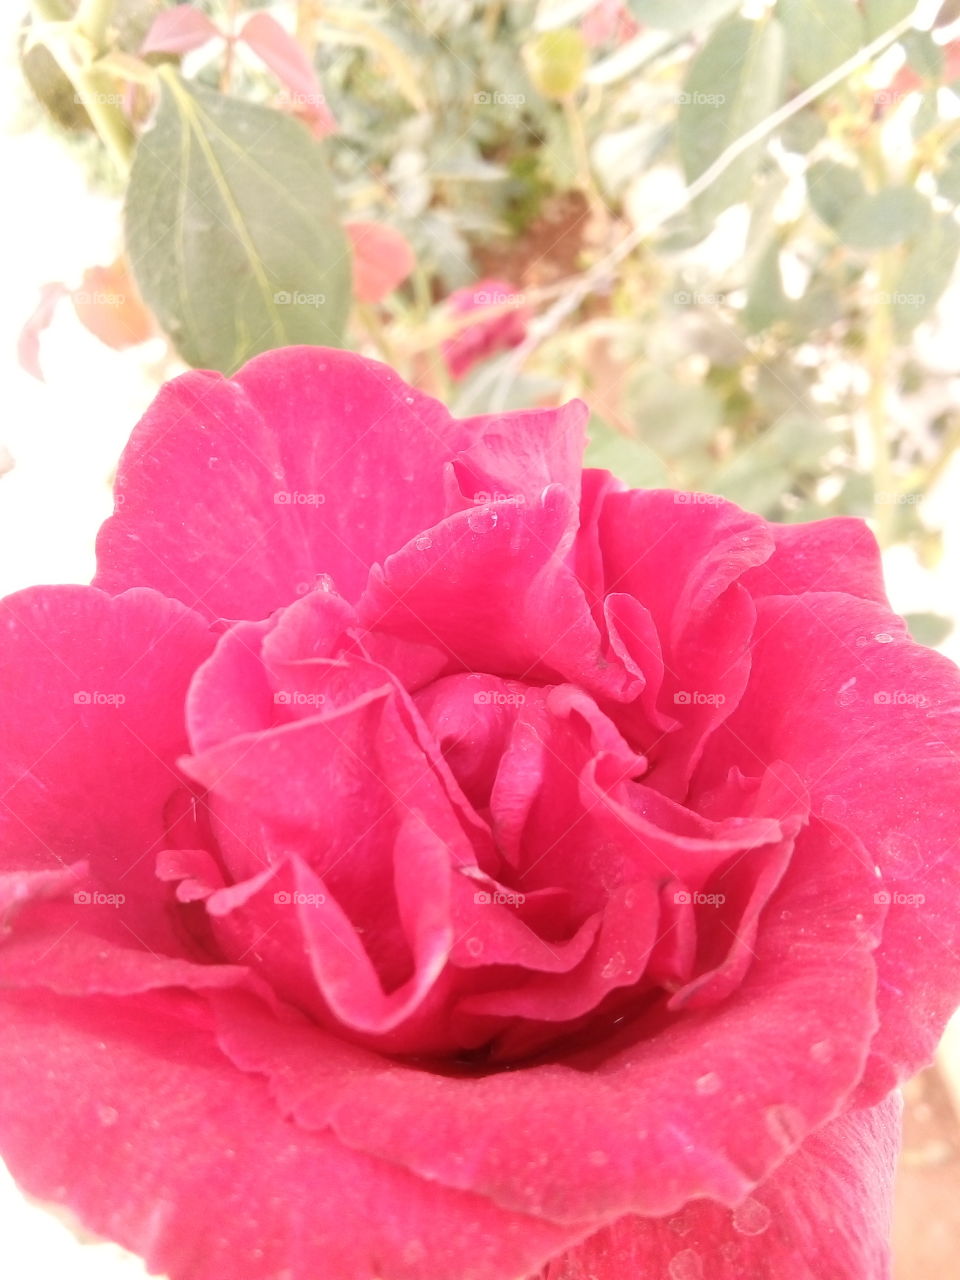 #rose #love #cute #USA #jordan #meqbel #bood #turkey #Tatlım
#nice #hope #20